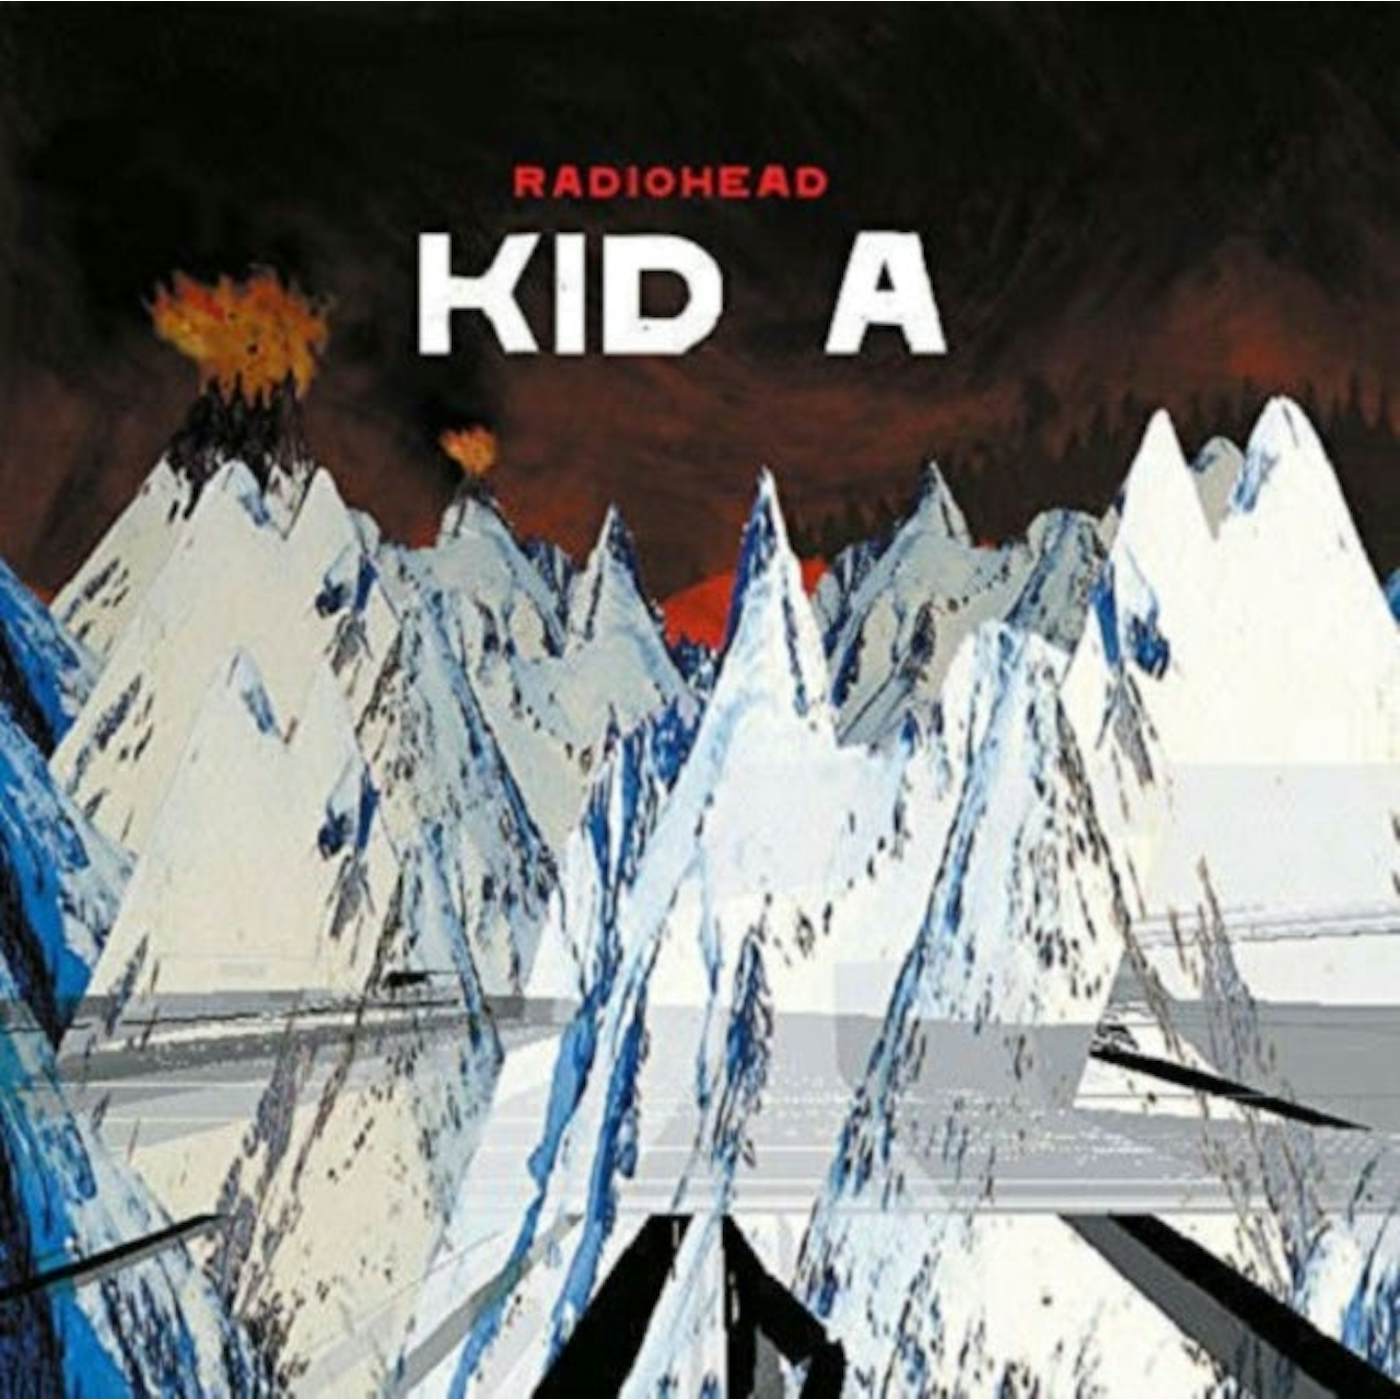 Radiohead LP Vinyl Record - Kid A